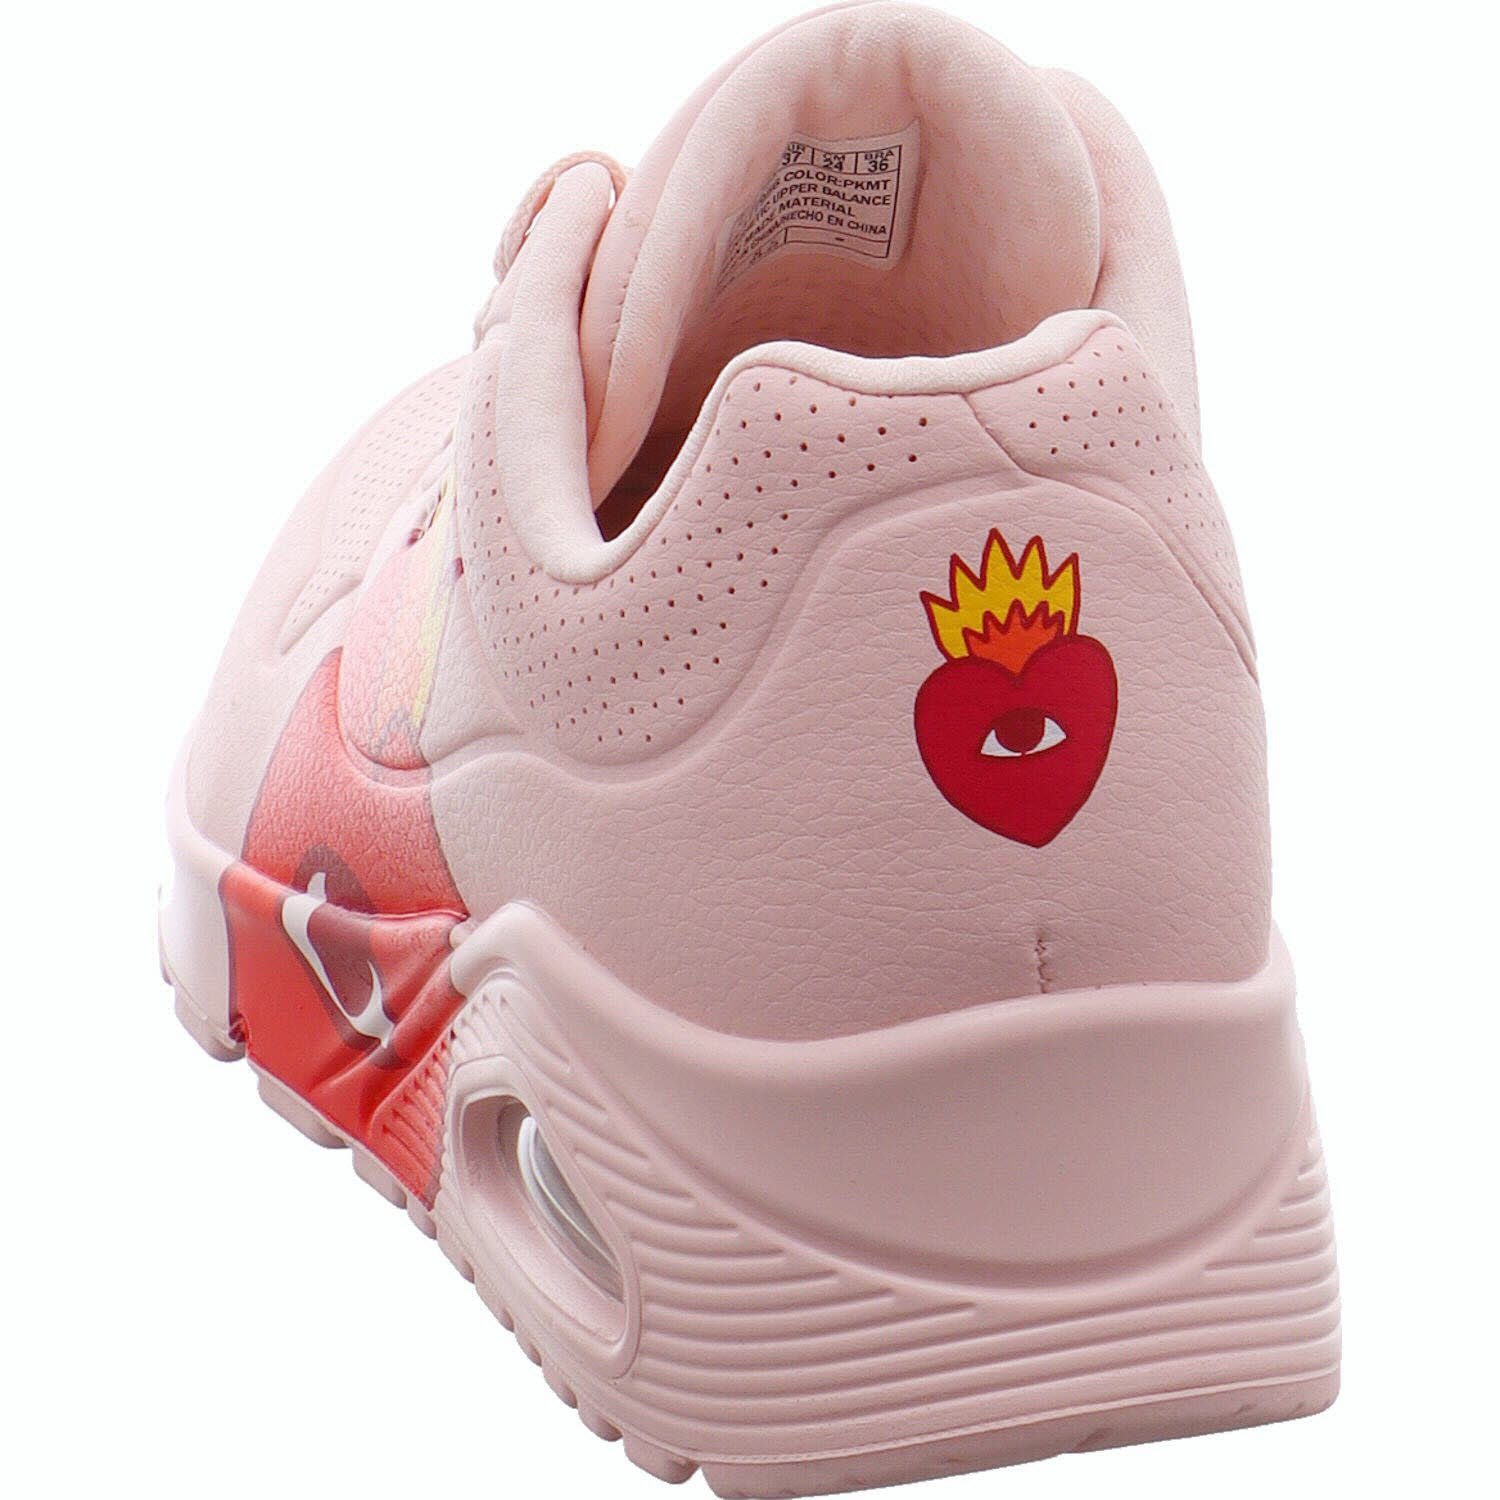 Uno Flaming Sneaker Heart - Skechers